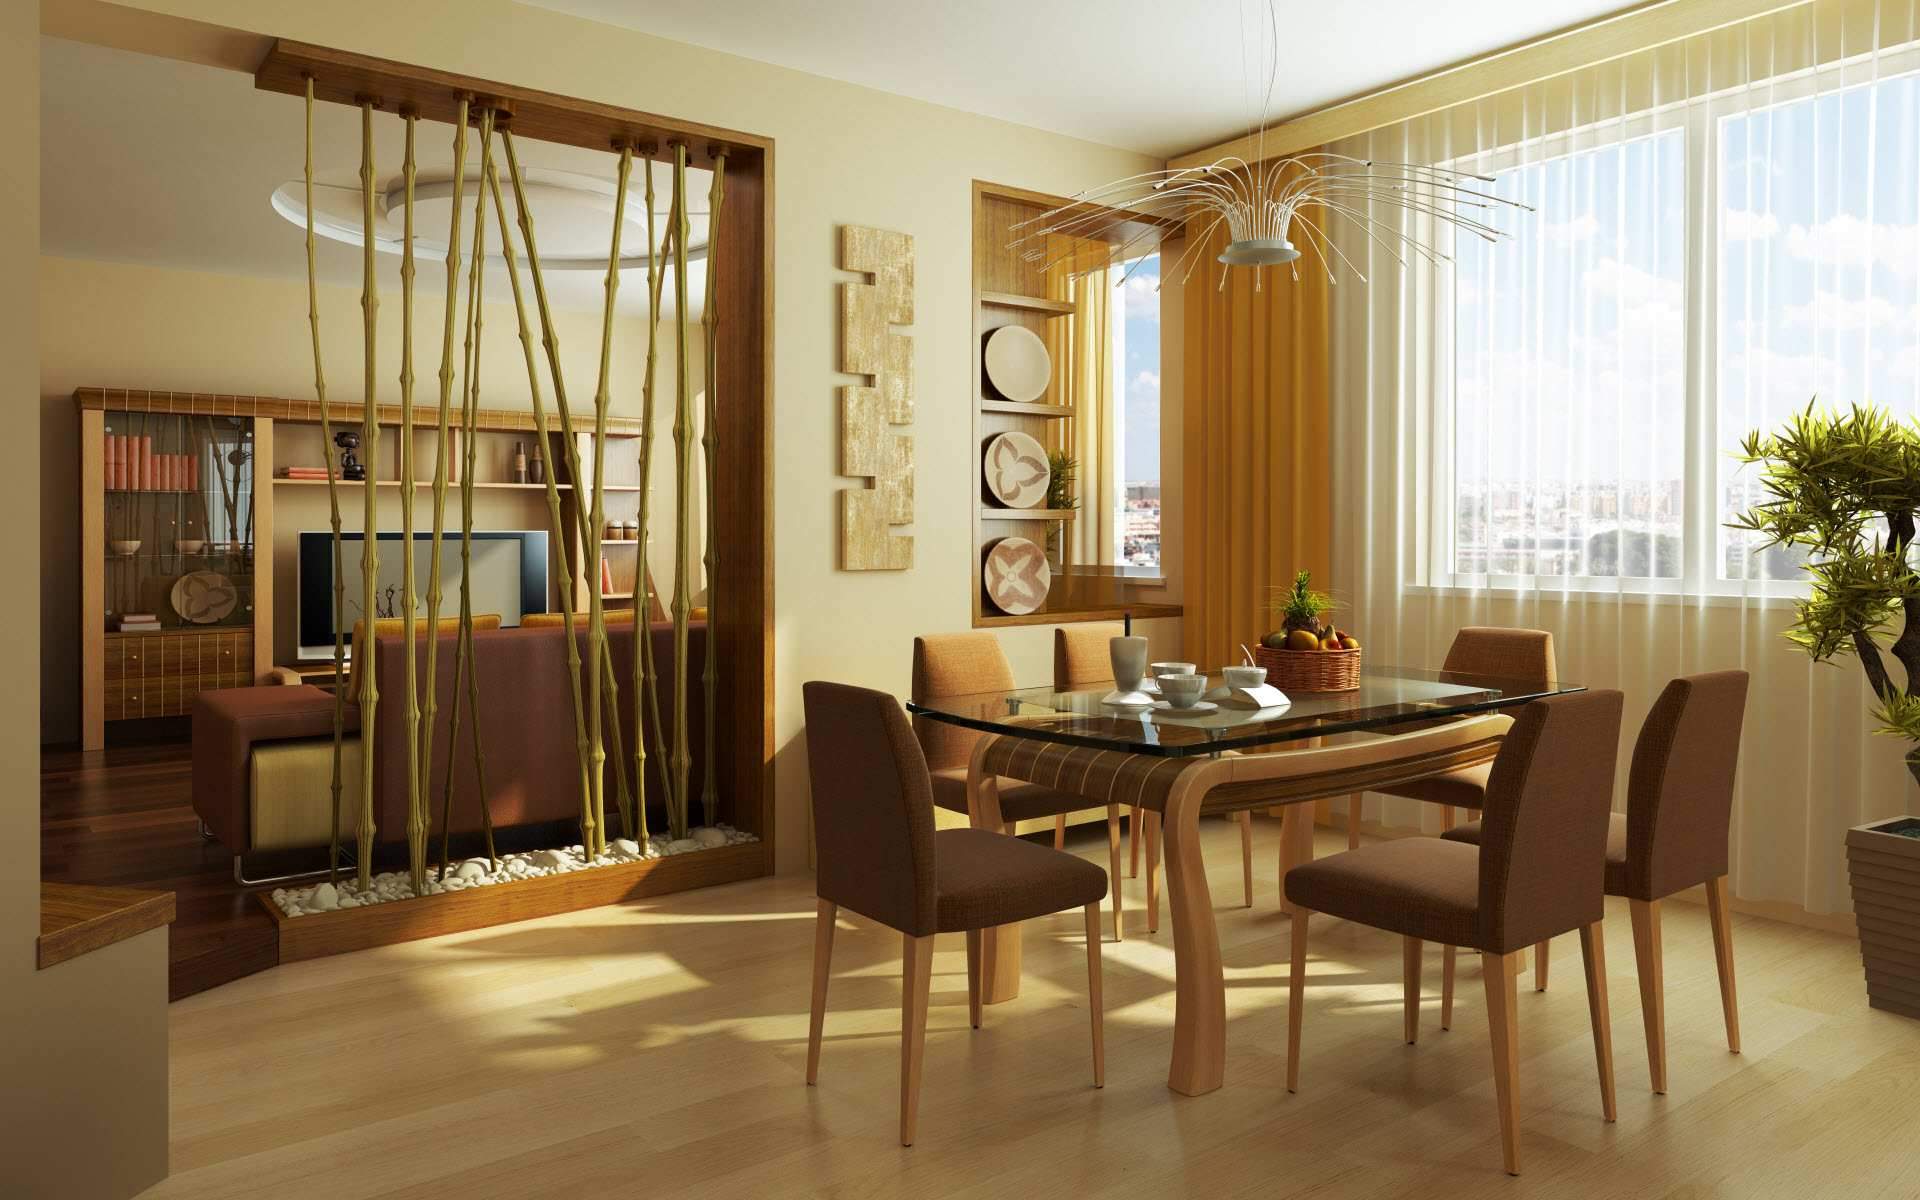 Inspiring Dining Room Interior Design Ideas You Must Try Ideas 4 Homes